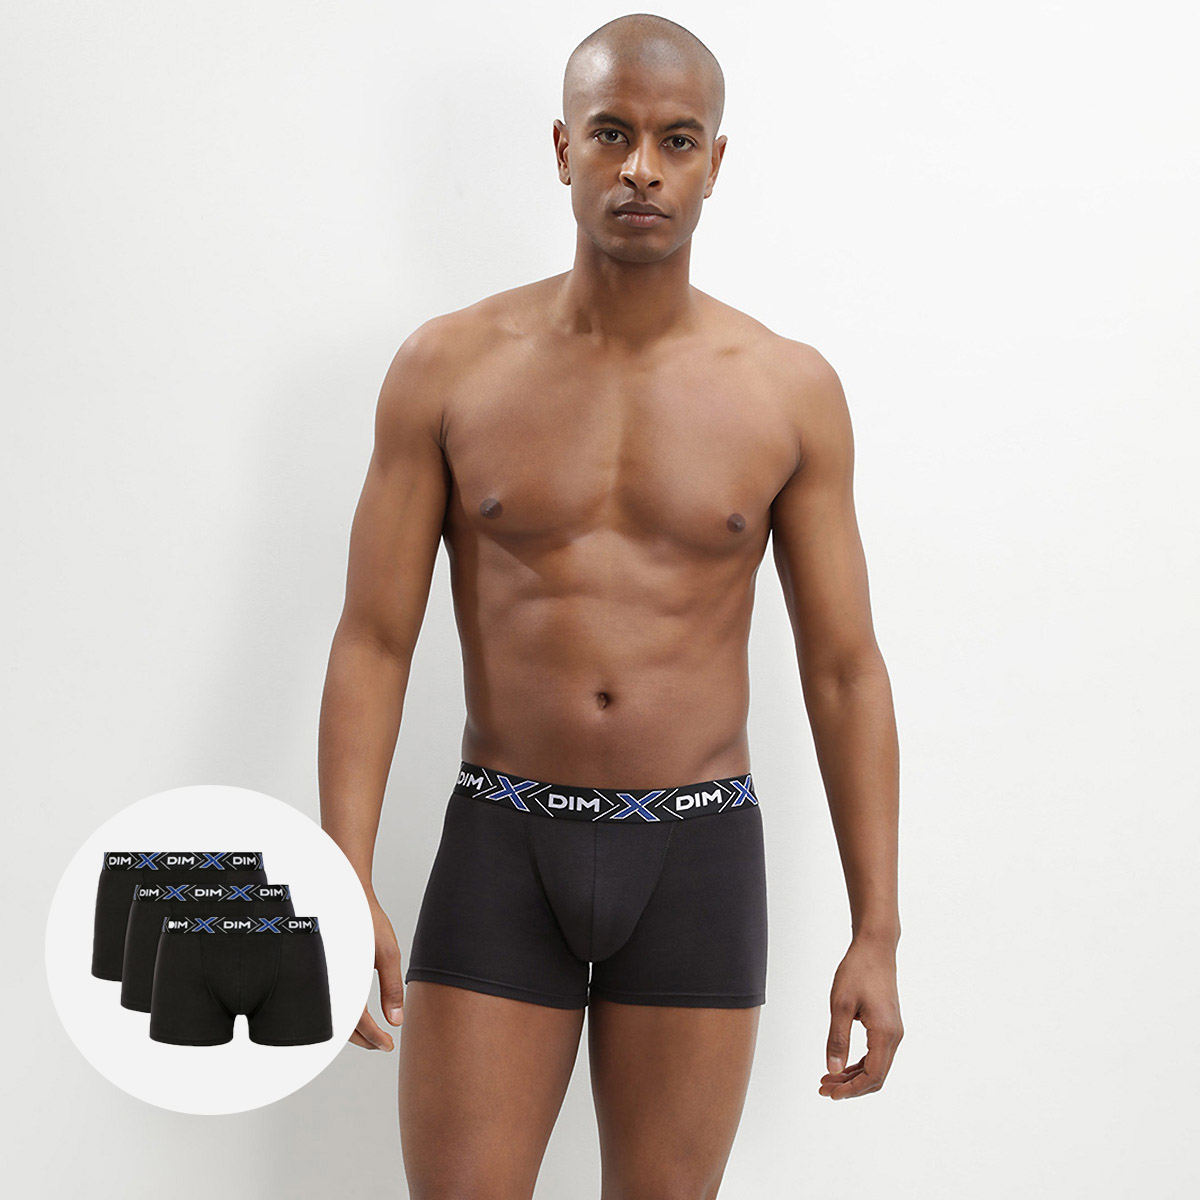 DIM EcoDim Men's Cotton Stretch Quality and Comfort Boxer Shorts